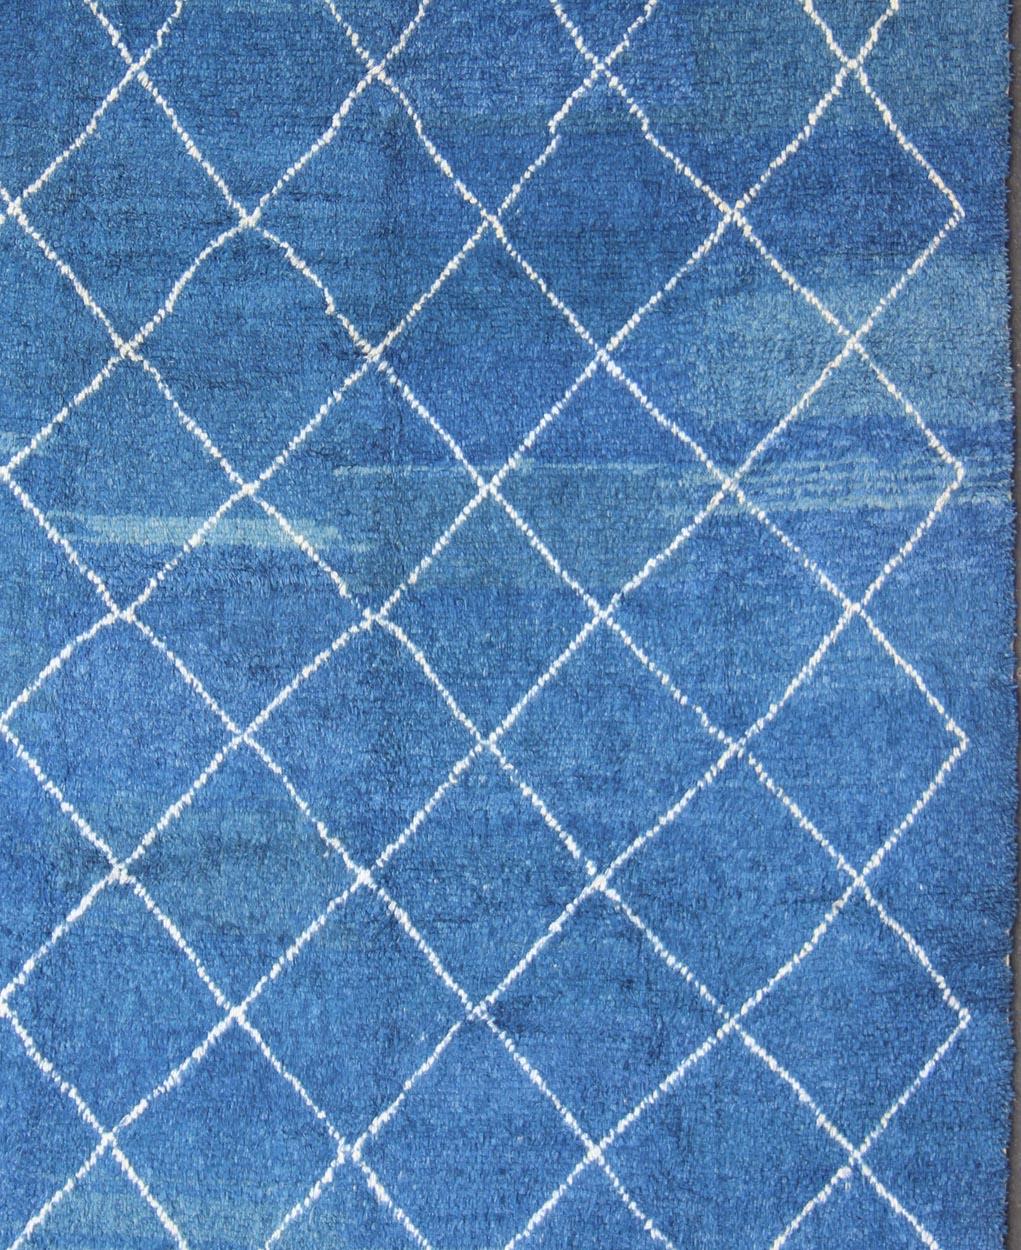 Modern Moroccan Rug with All-Over Lattice Design by Keivan Woven Arts.  rug TU-ALG-27, Keivan Woven Arts / country of origin / type: Turkey / Tribal
Measures: 9'8 x 13'0.
This tribal Moroccan/Tulu rug with a modern design rendered in a lattice